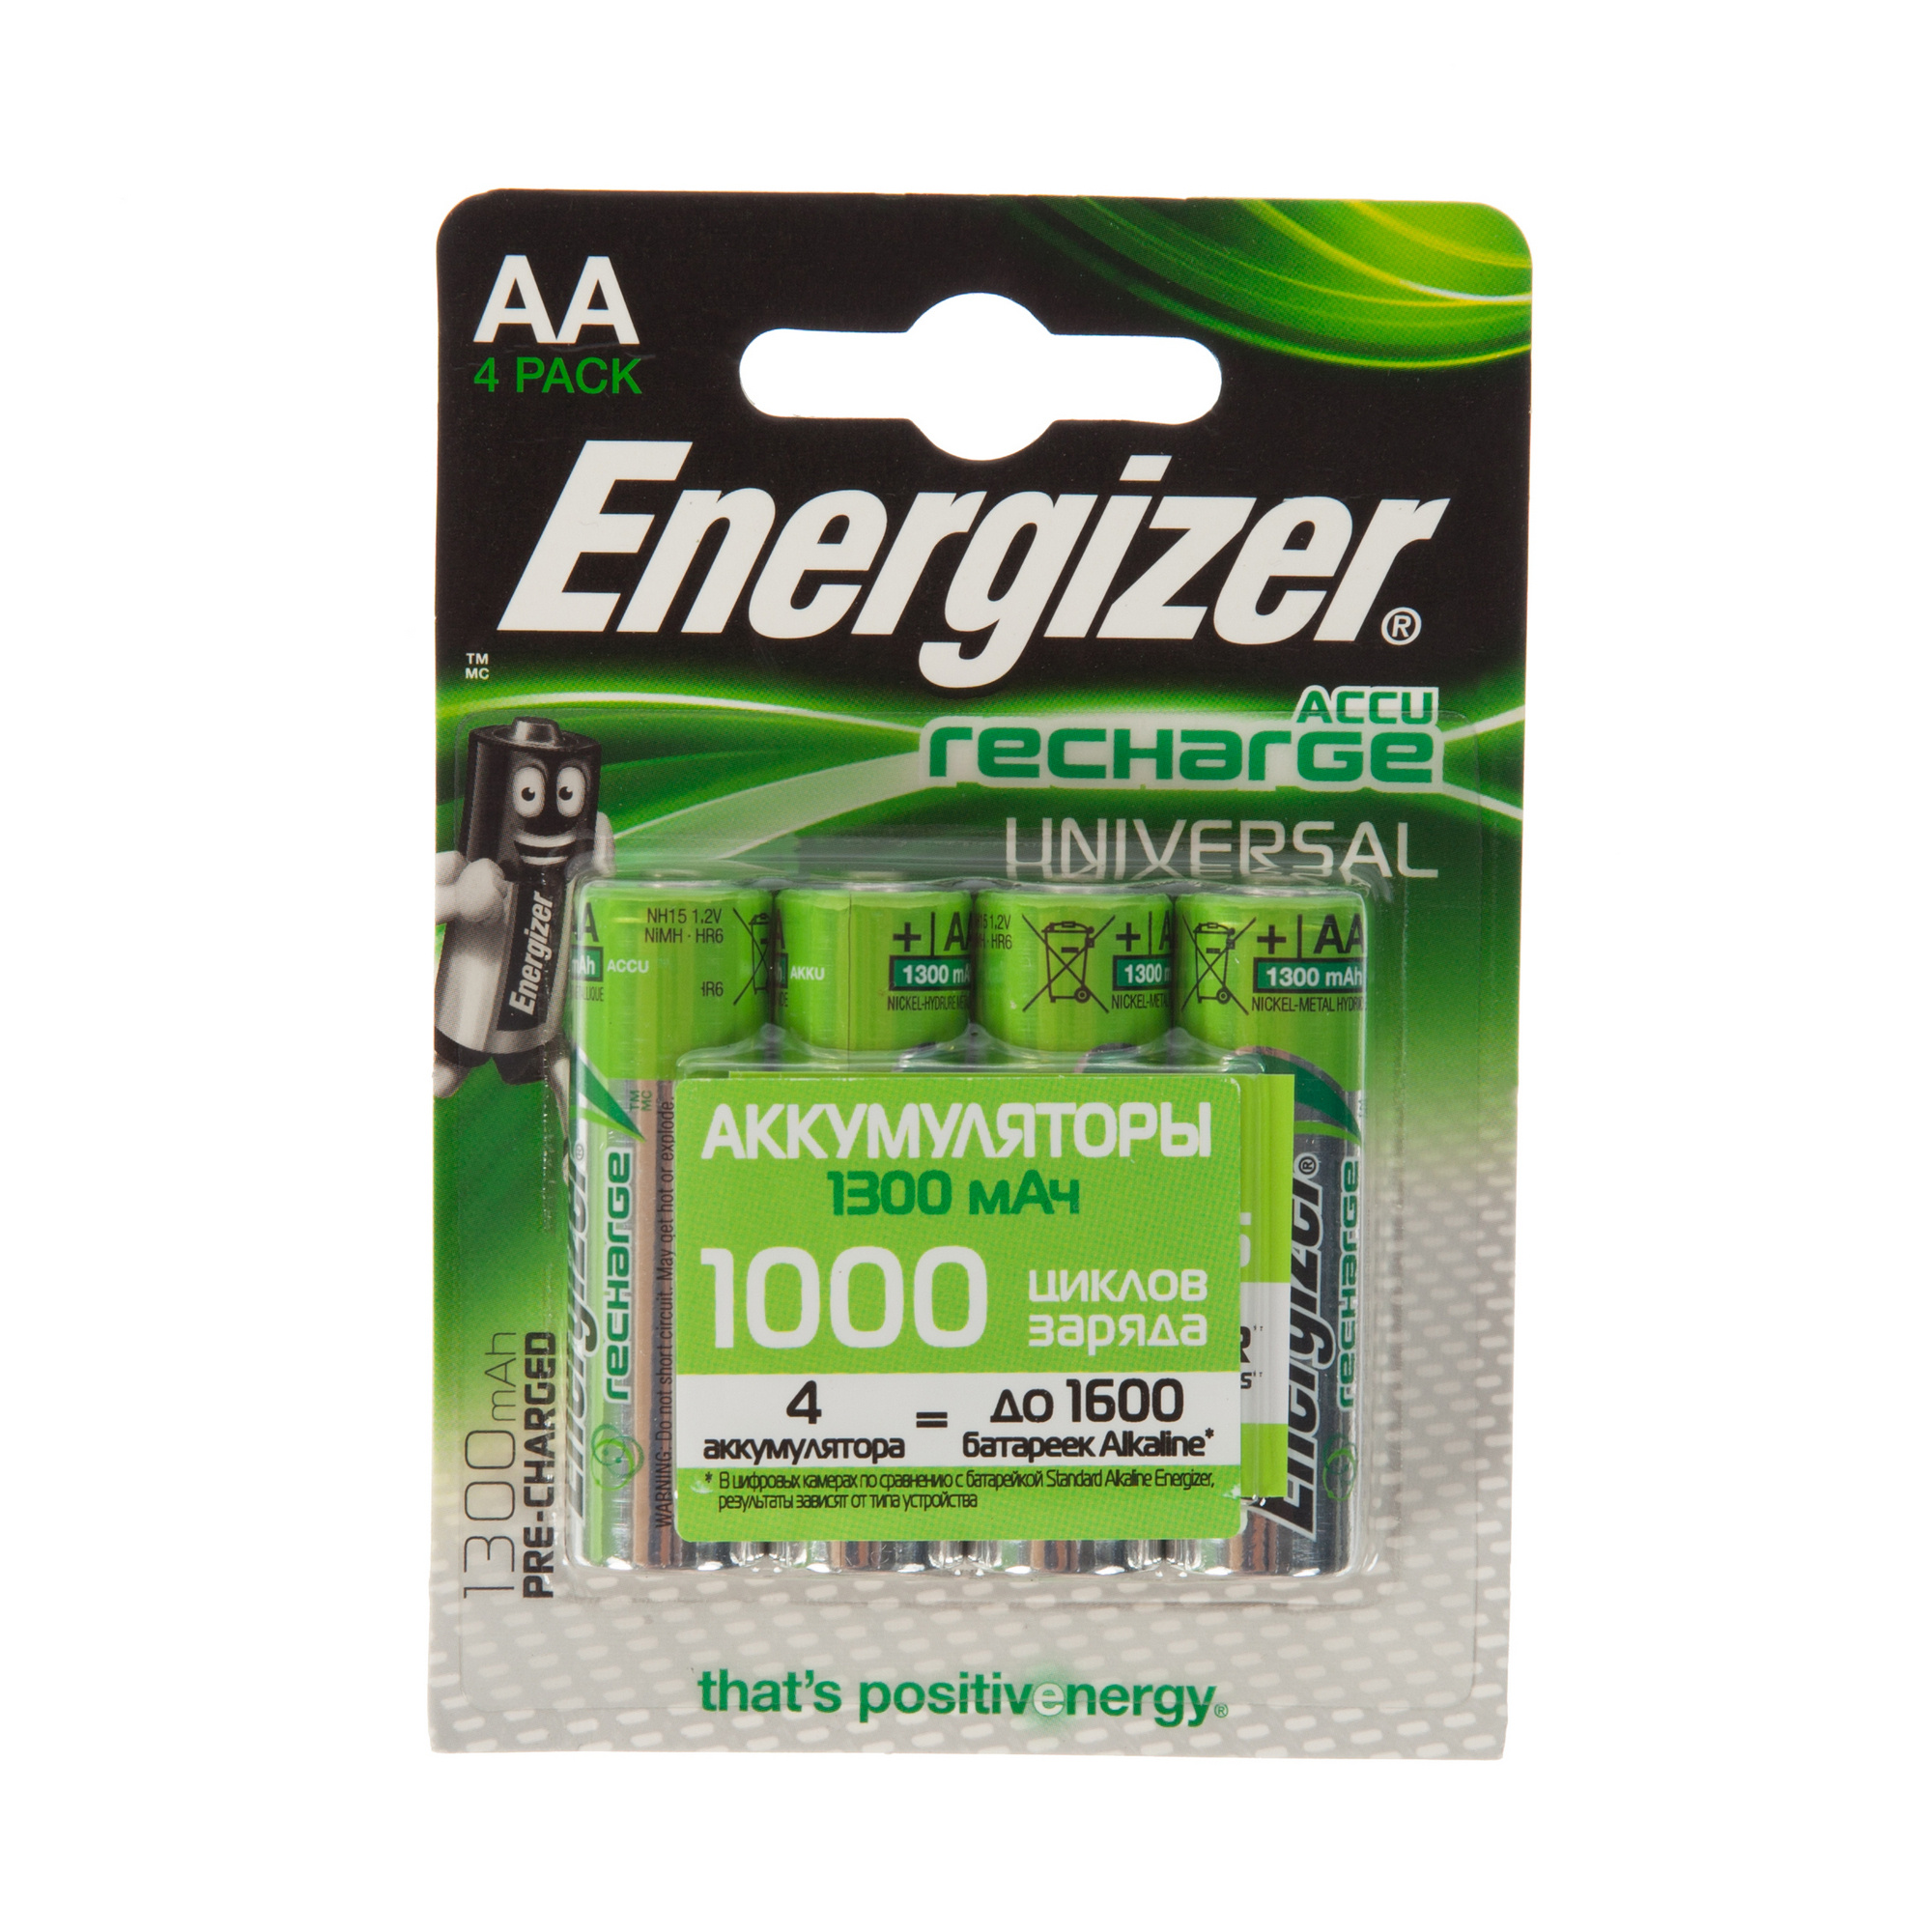 Повер плюс. Аккумулятор ni-MH 2000 ма·ч Energizer Accu Recharge Power Plus AA. Батарейки Energizer Power Plus nh15 2000mah вр4 4 шт. Аккумулятор Energizer ue2601. Аккумулятор Energizer ue2202.